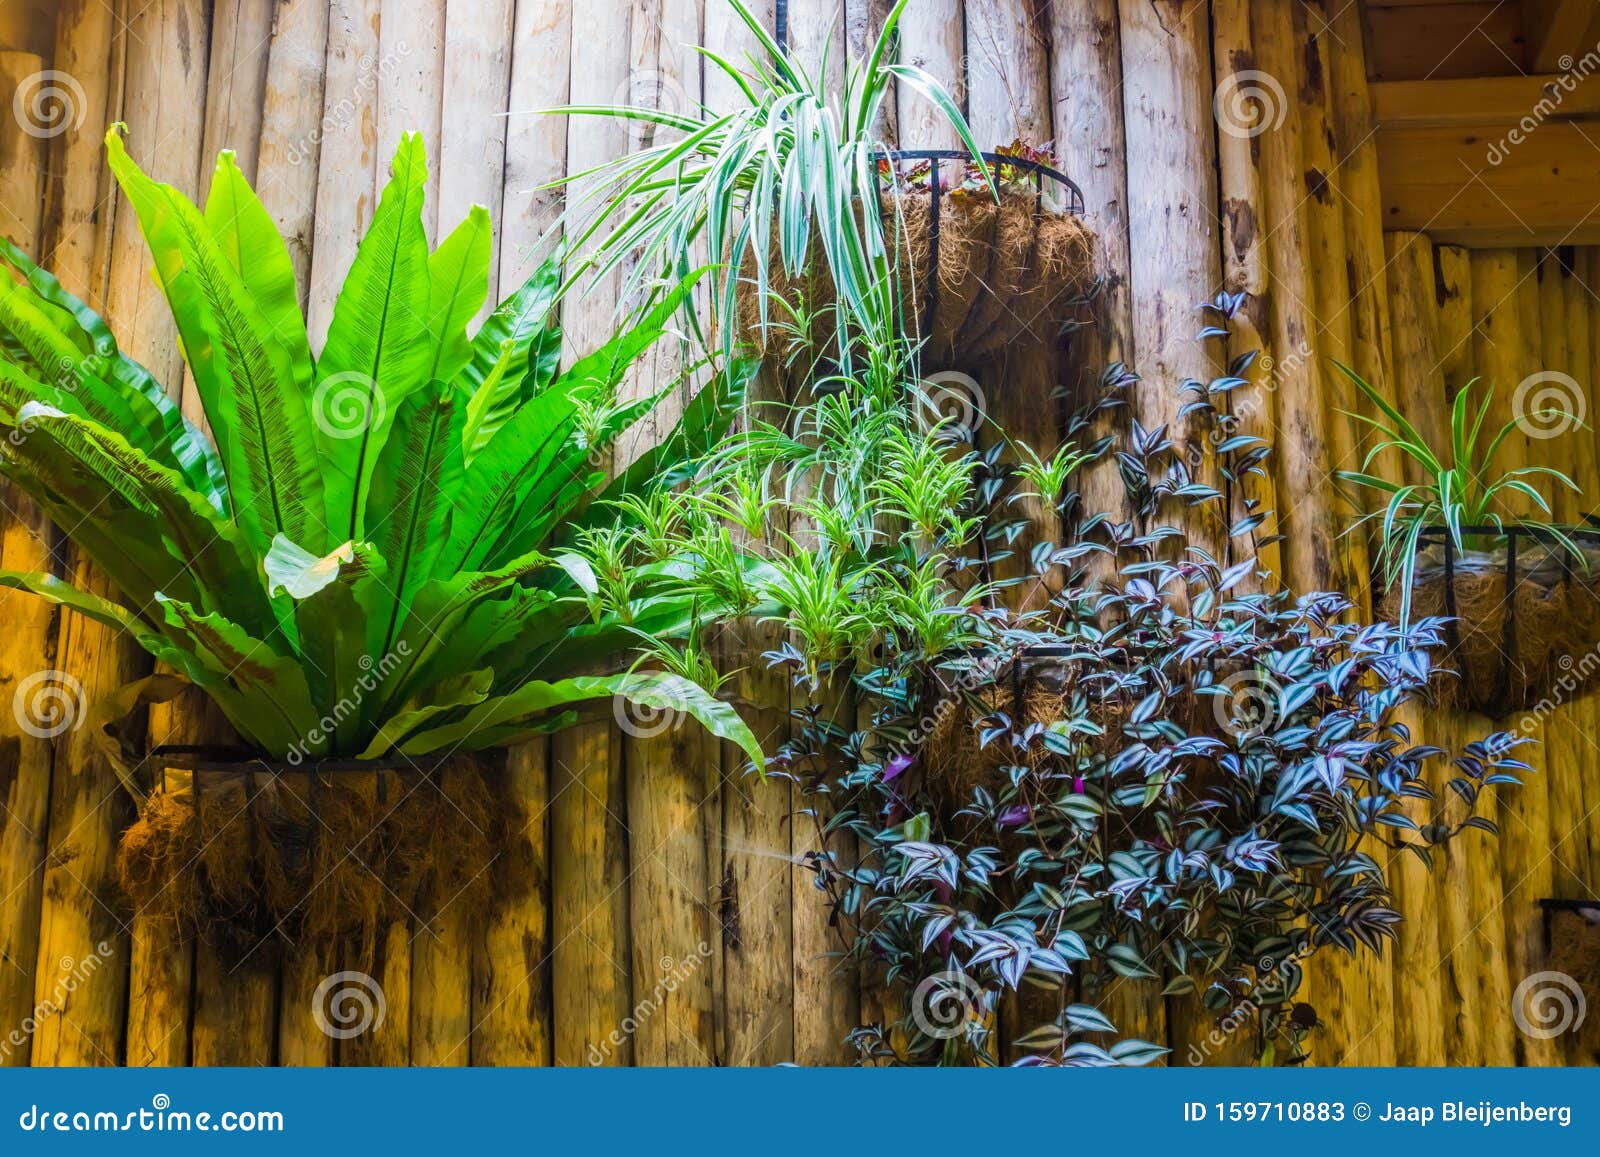 Home garden plant like wall